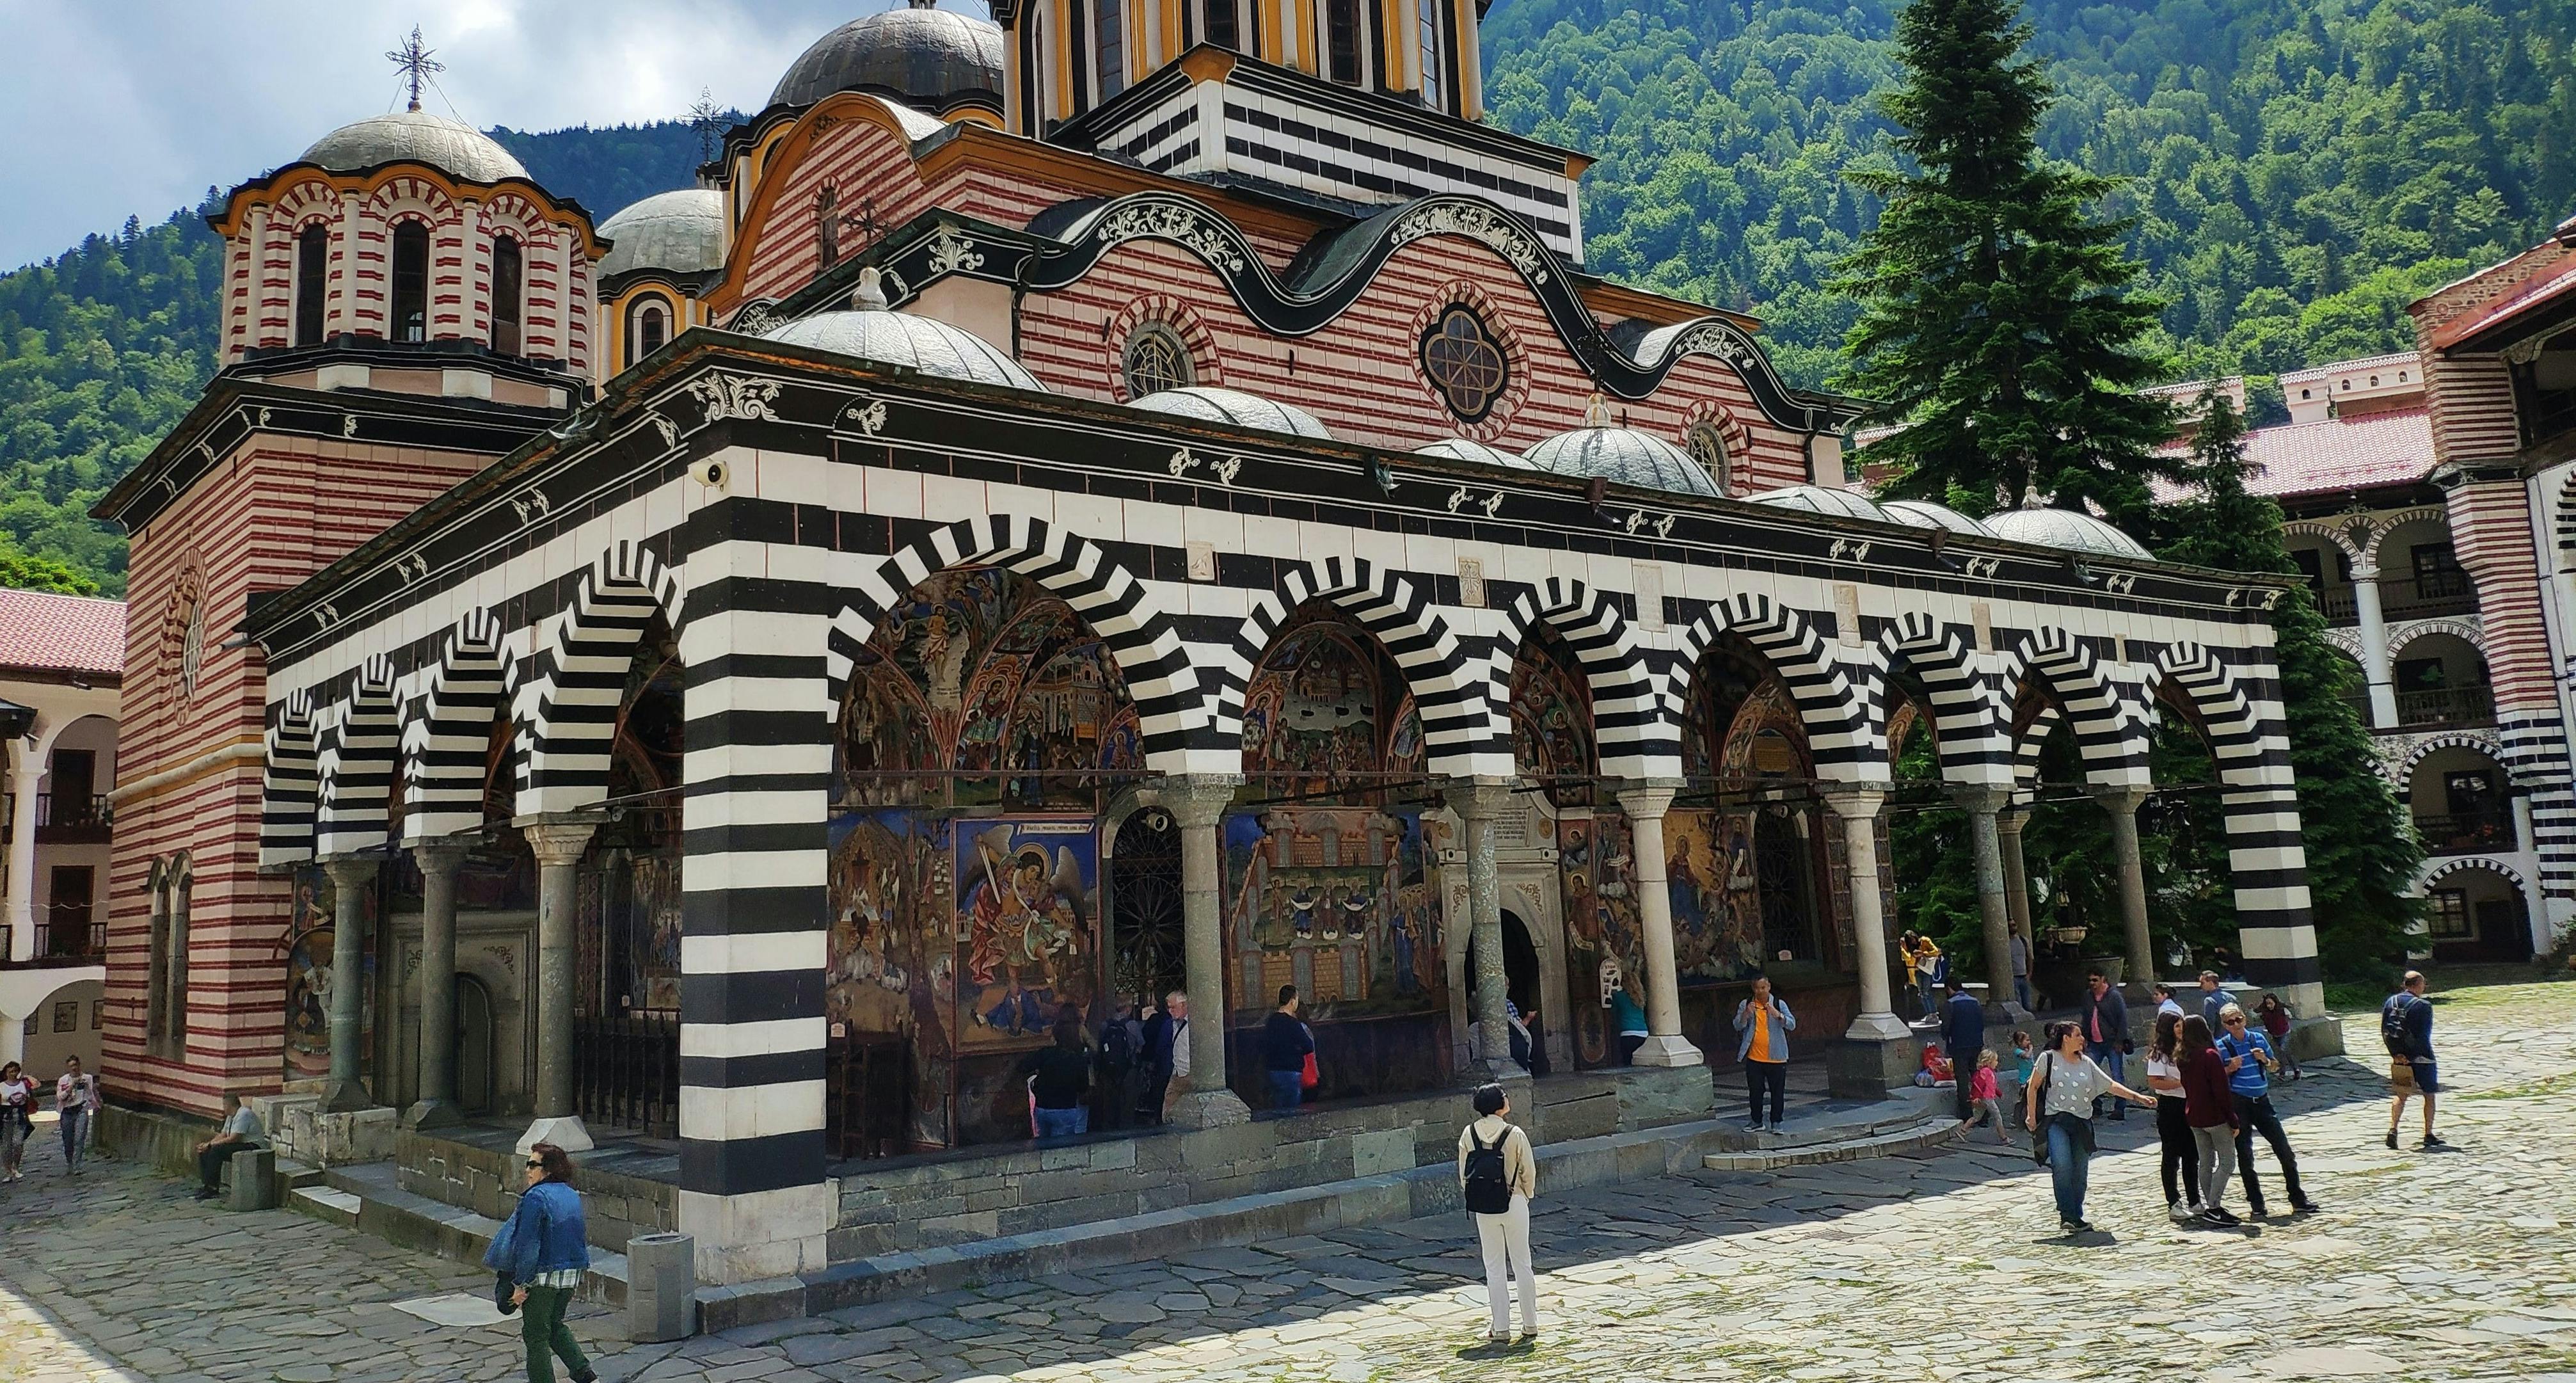 Self-guided tour in Rila Monastery